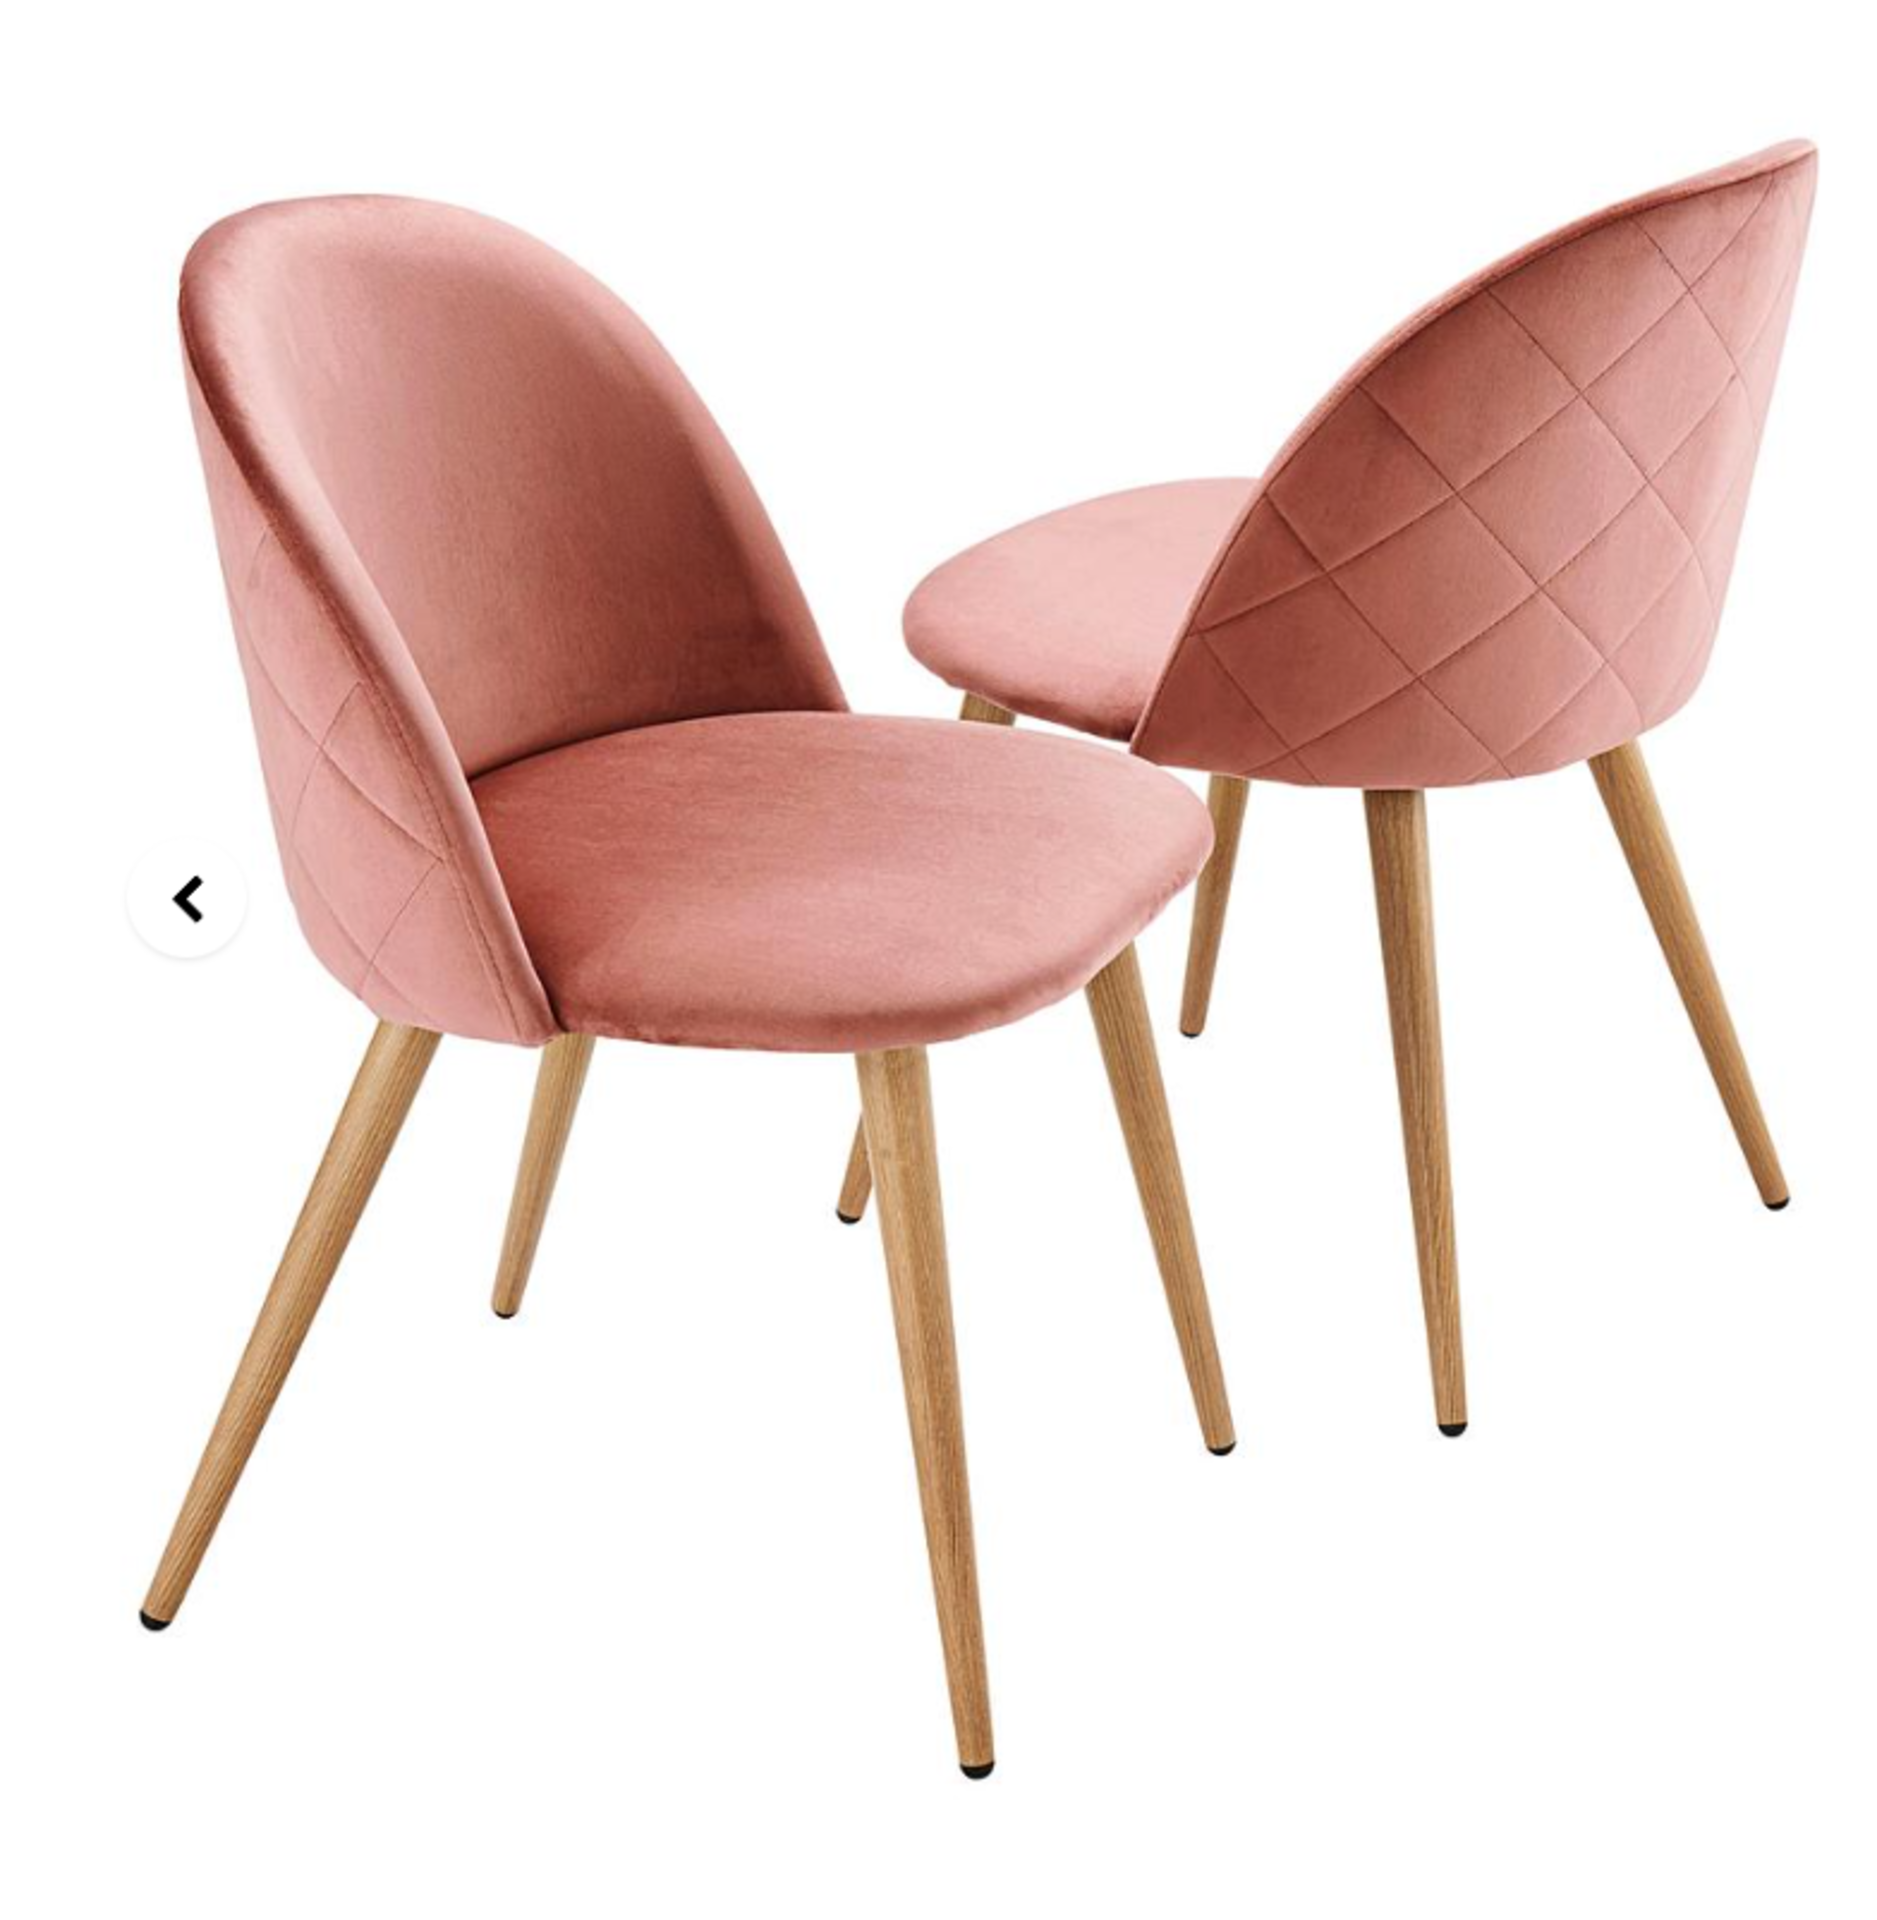 Klara Velvet Pair of Dining Chairs. - SR49. RRP £199.00. (22/28) The Klara Dining Chairs are the